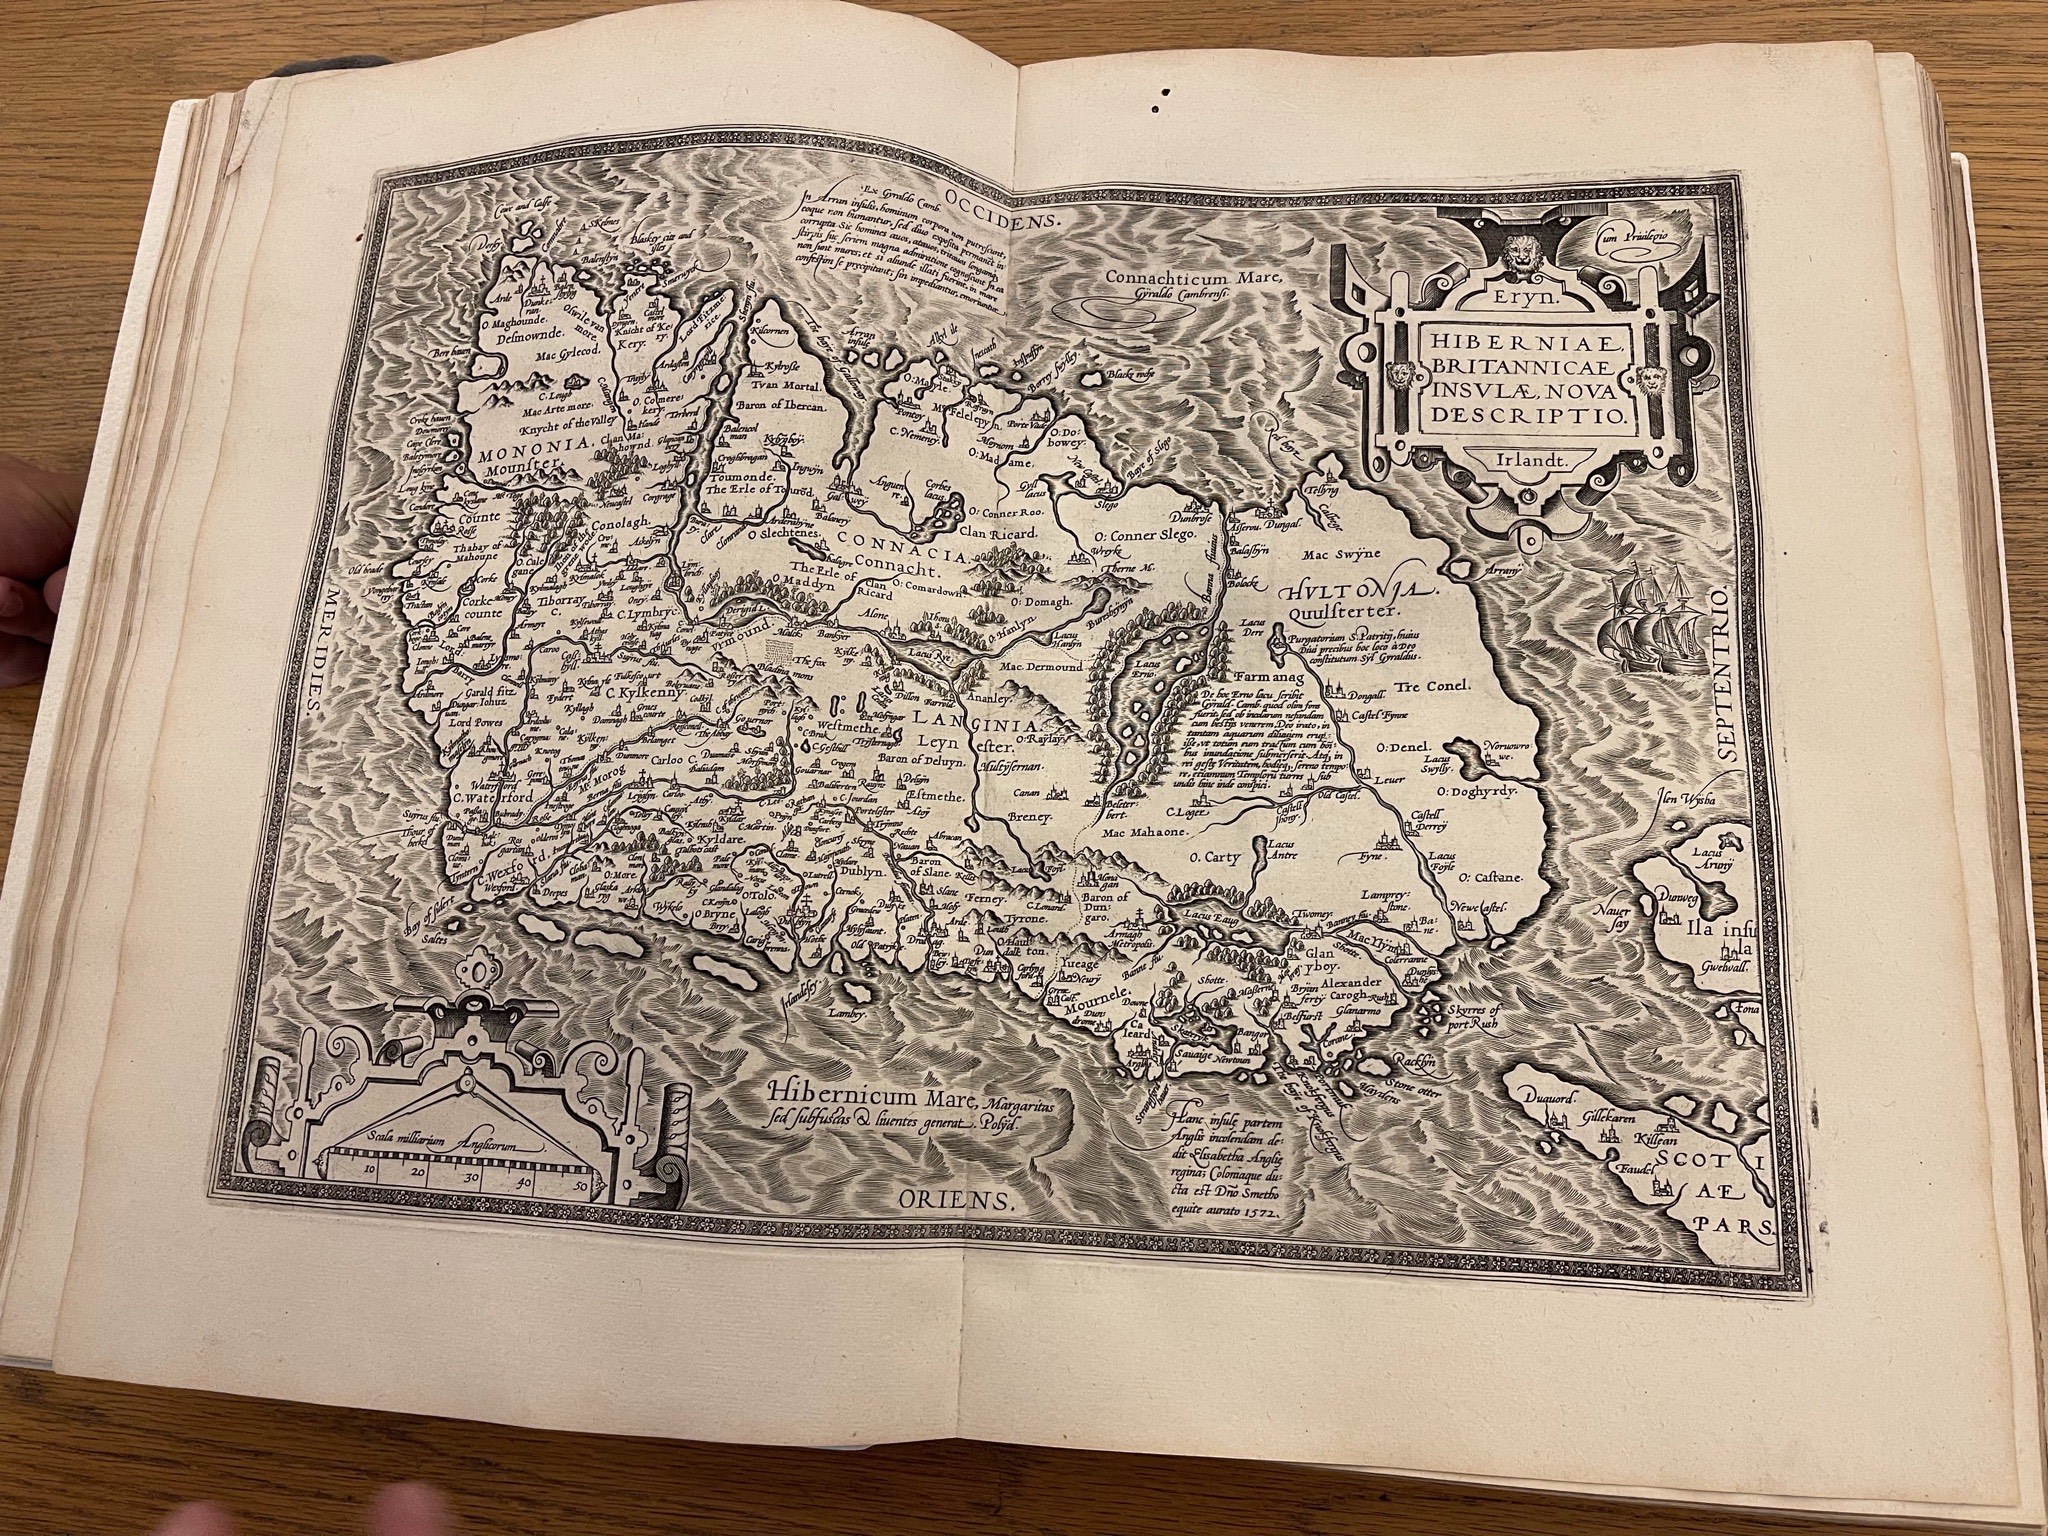 1595 Ortelius Atlas, book open with map of Ireland showing